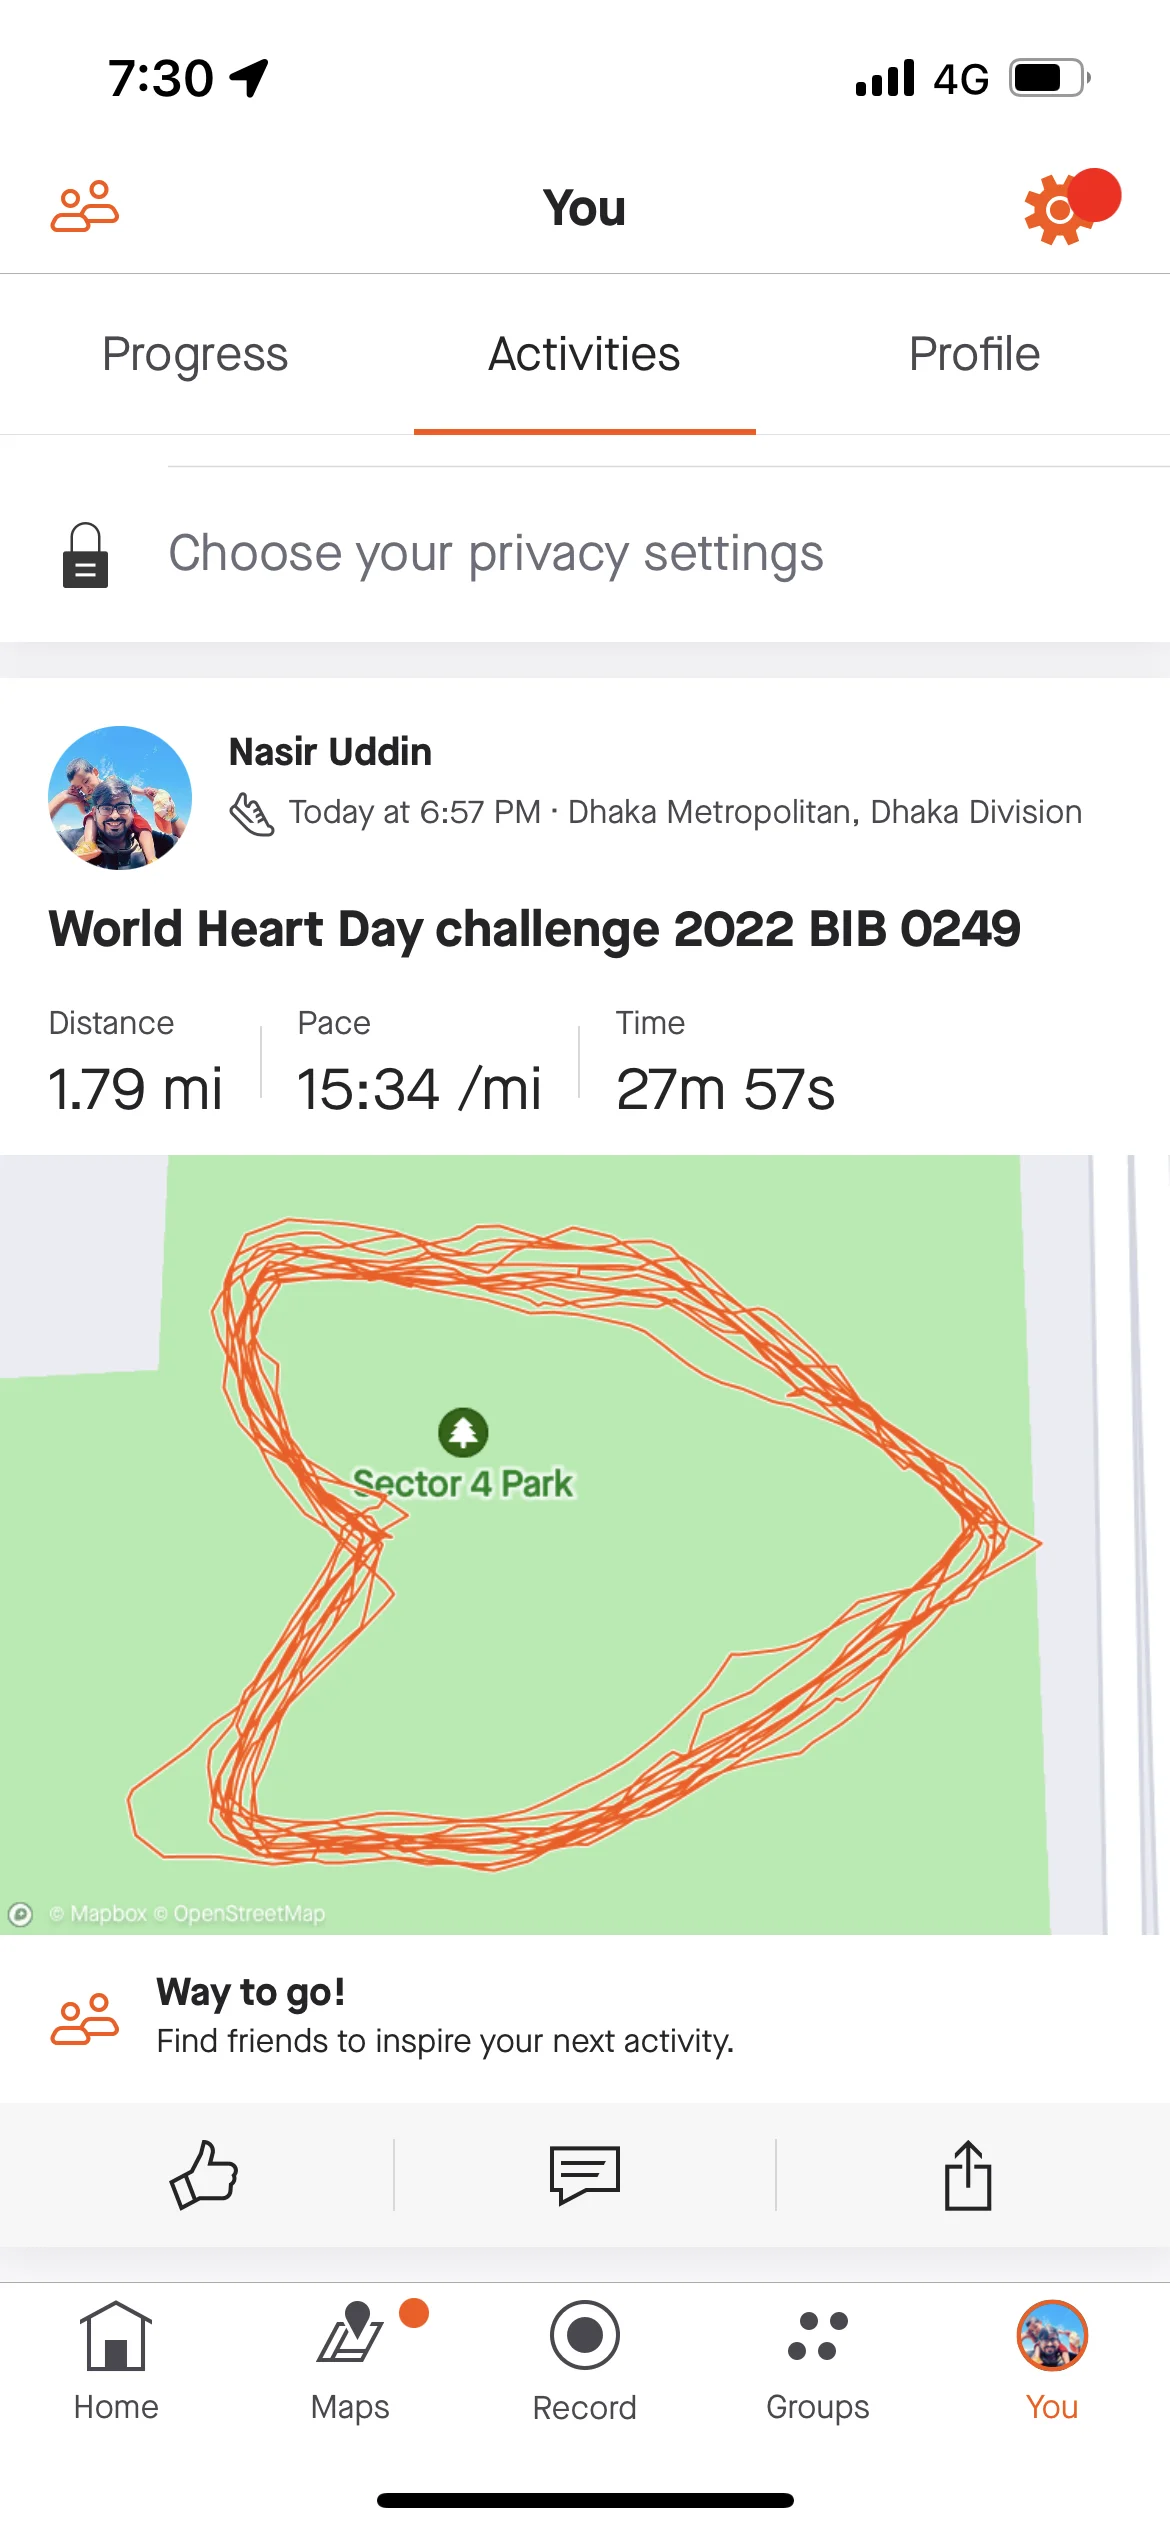 World Heart Day challenge 2022 BIB 0249